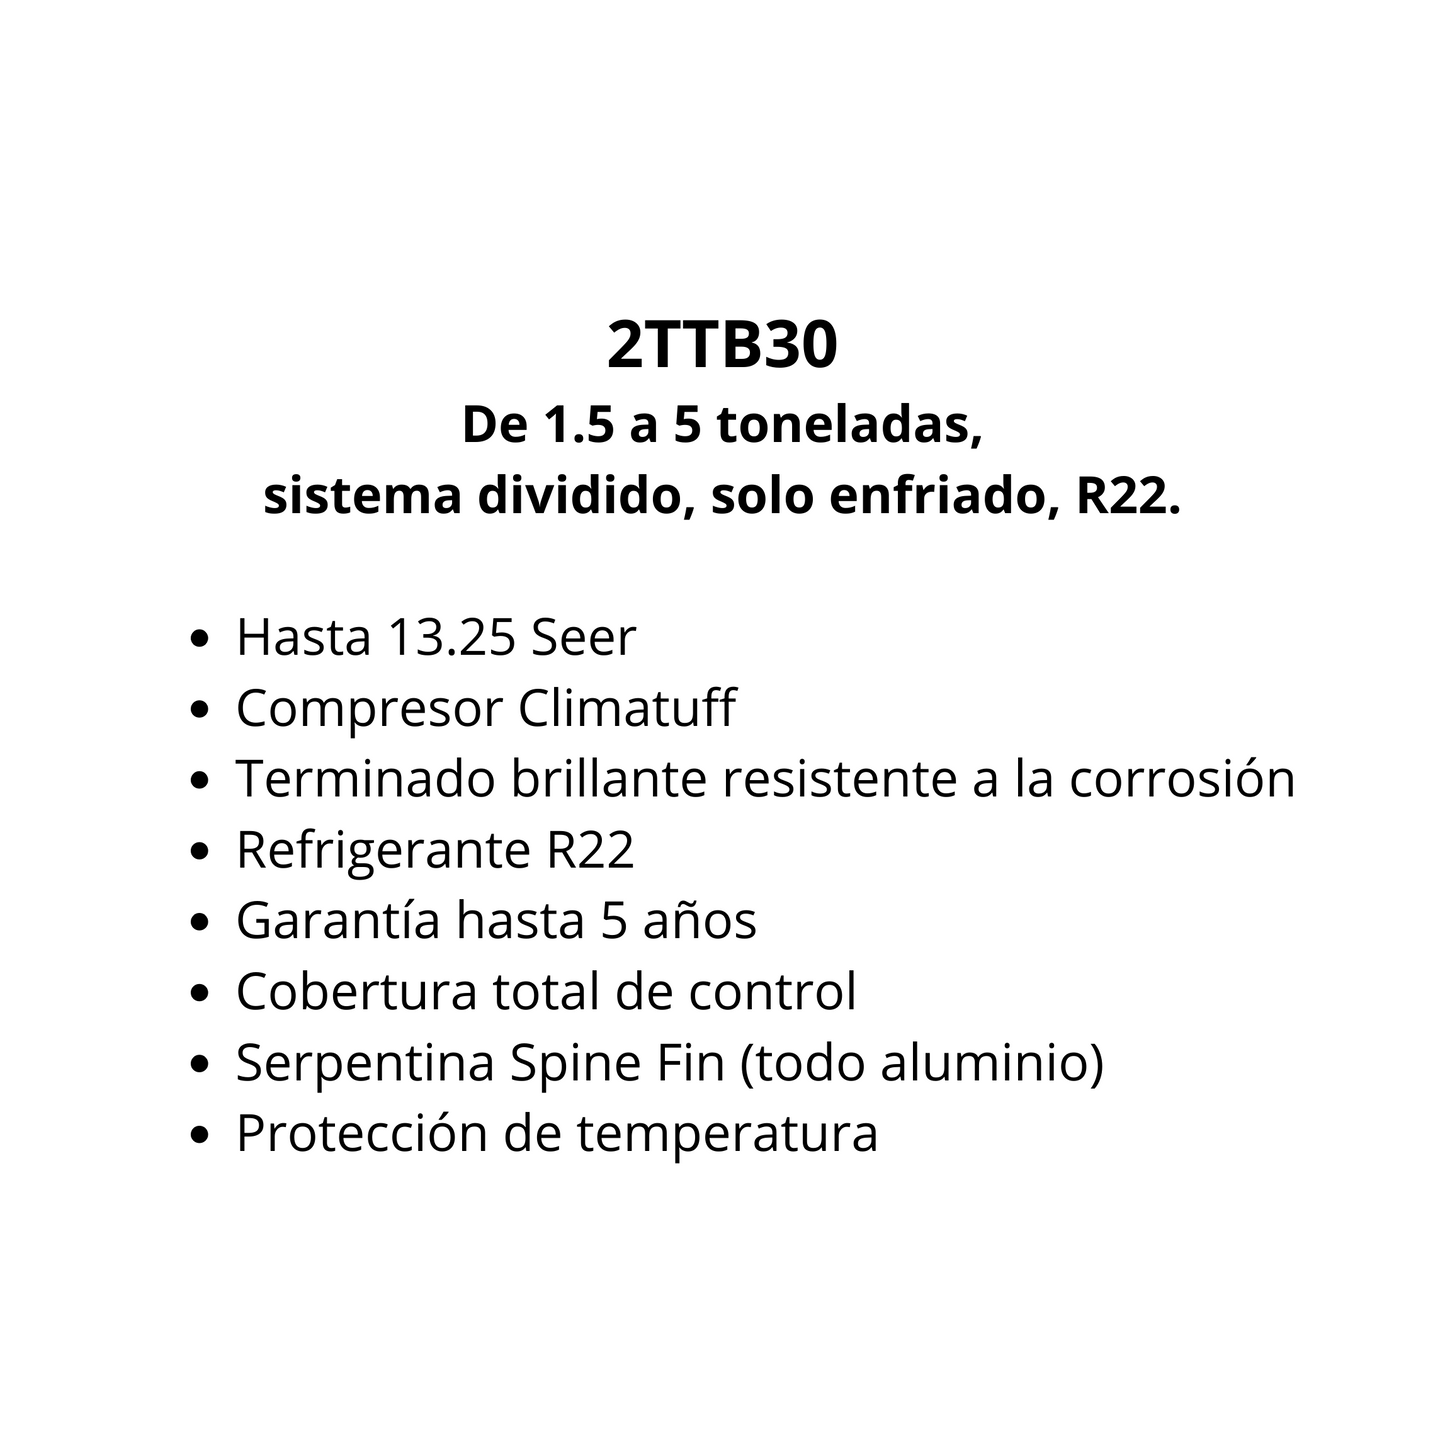 Condensadora - 2TTB30